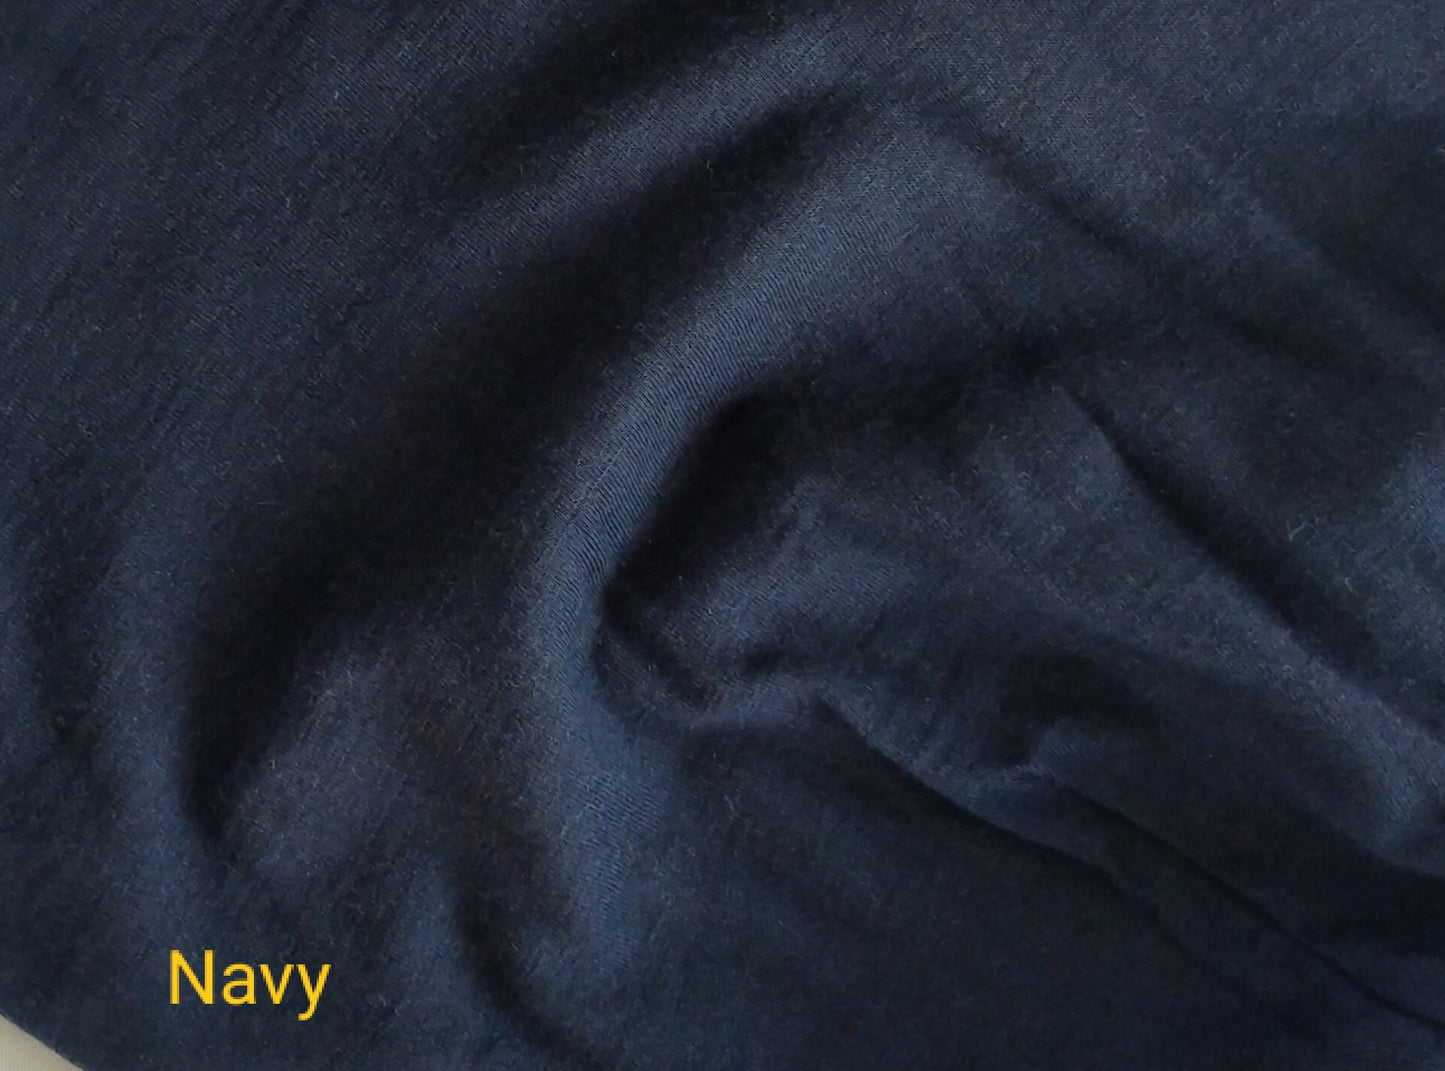 Standard Beanie - Navy/Army